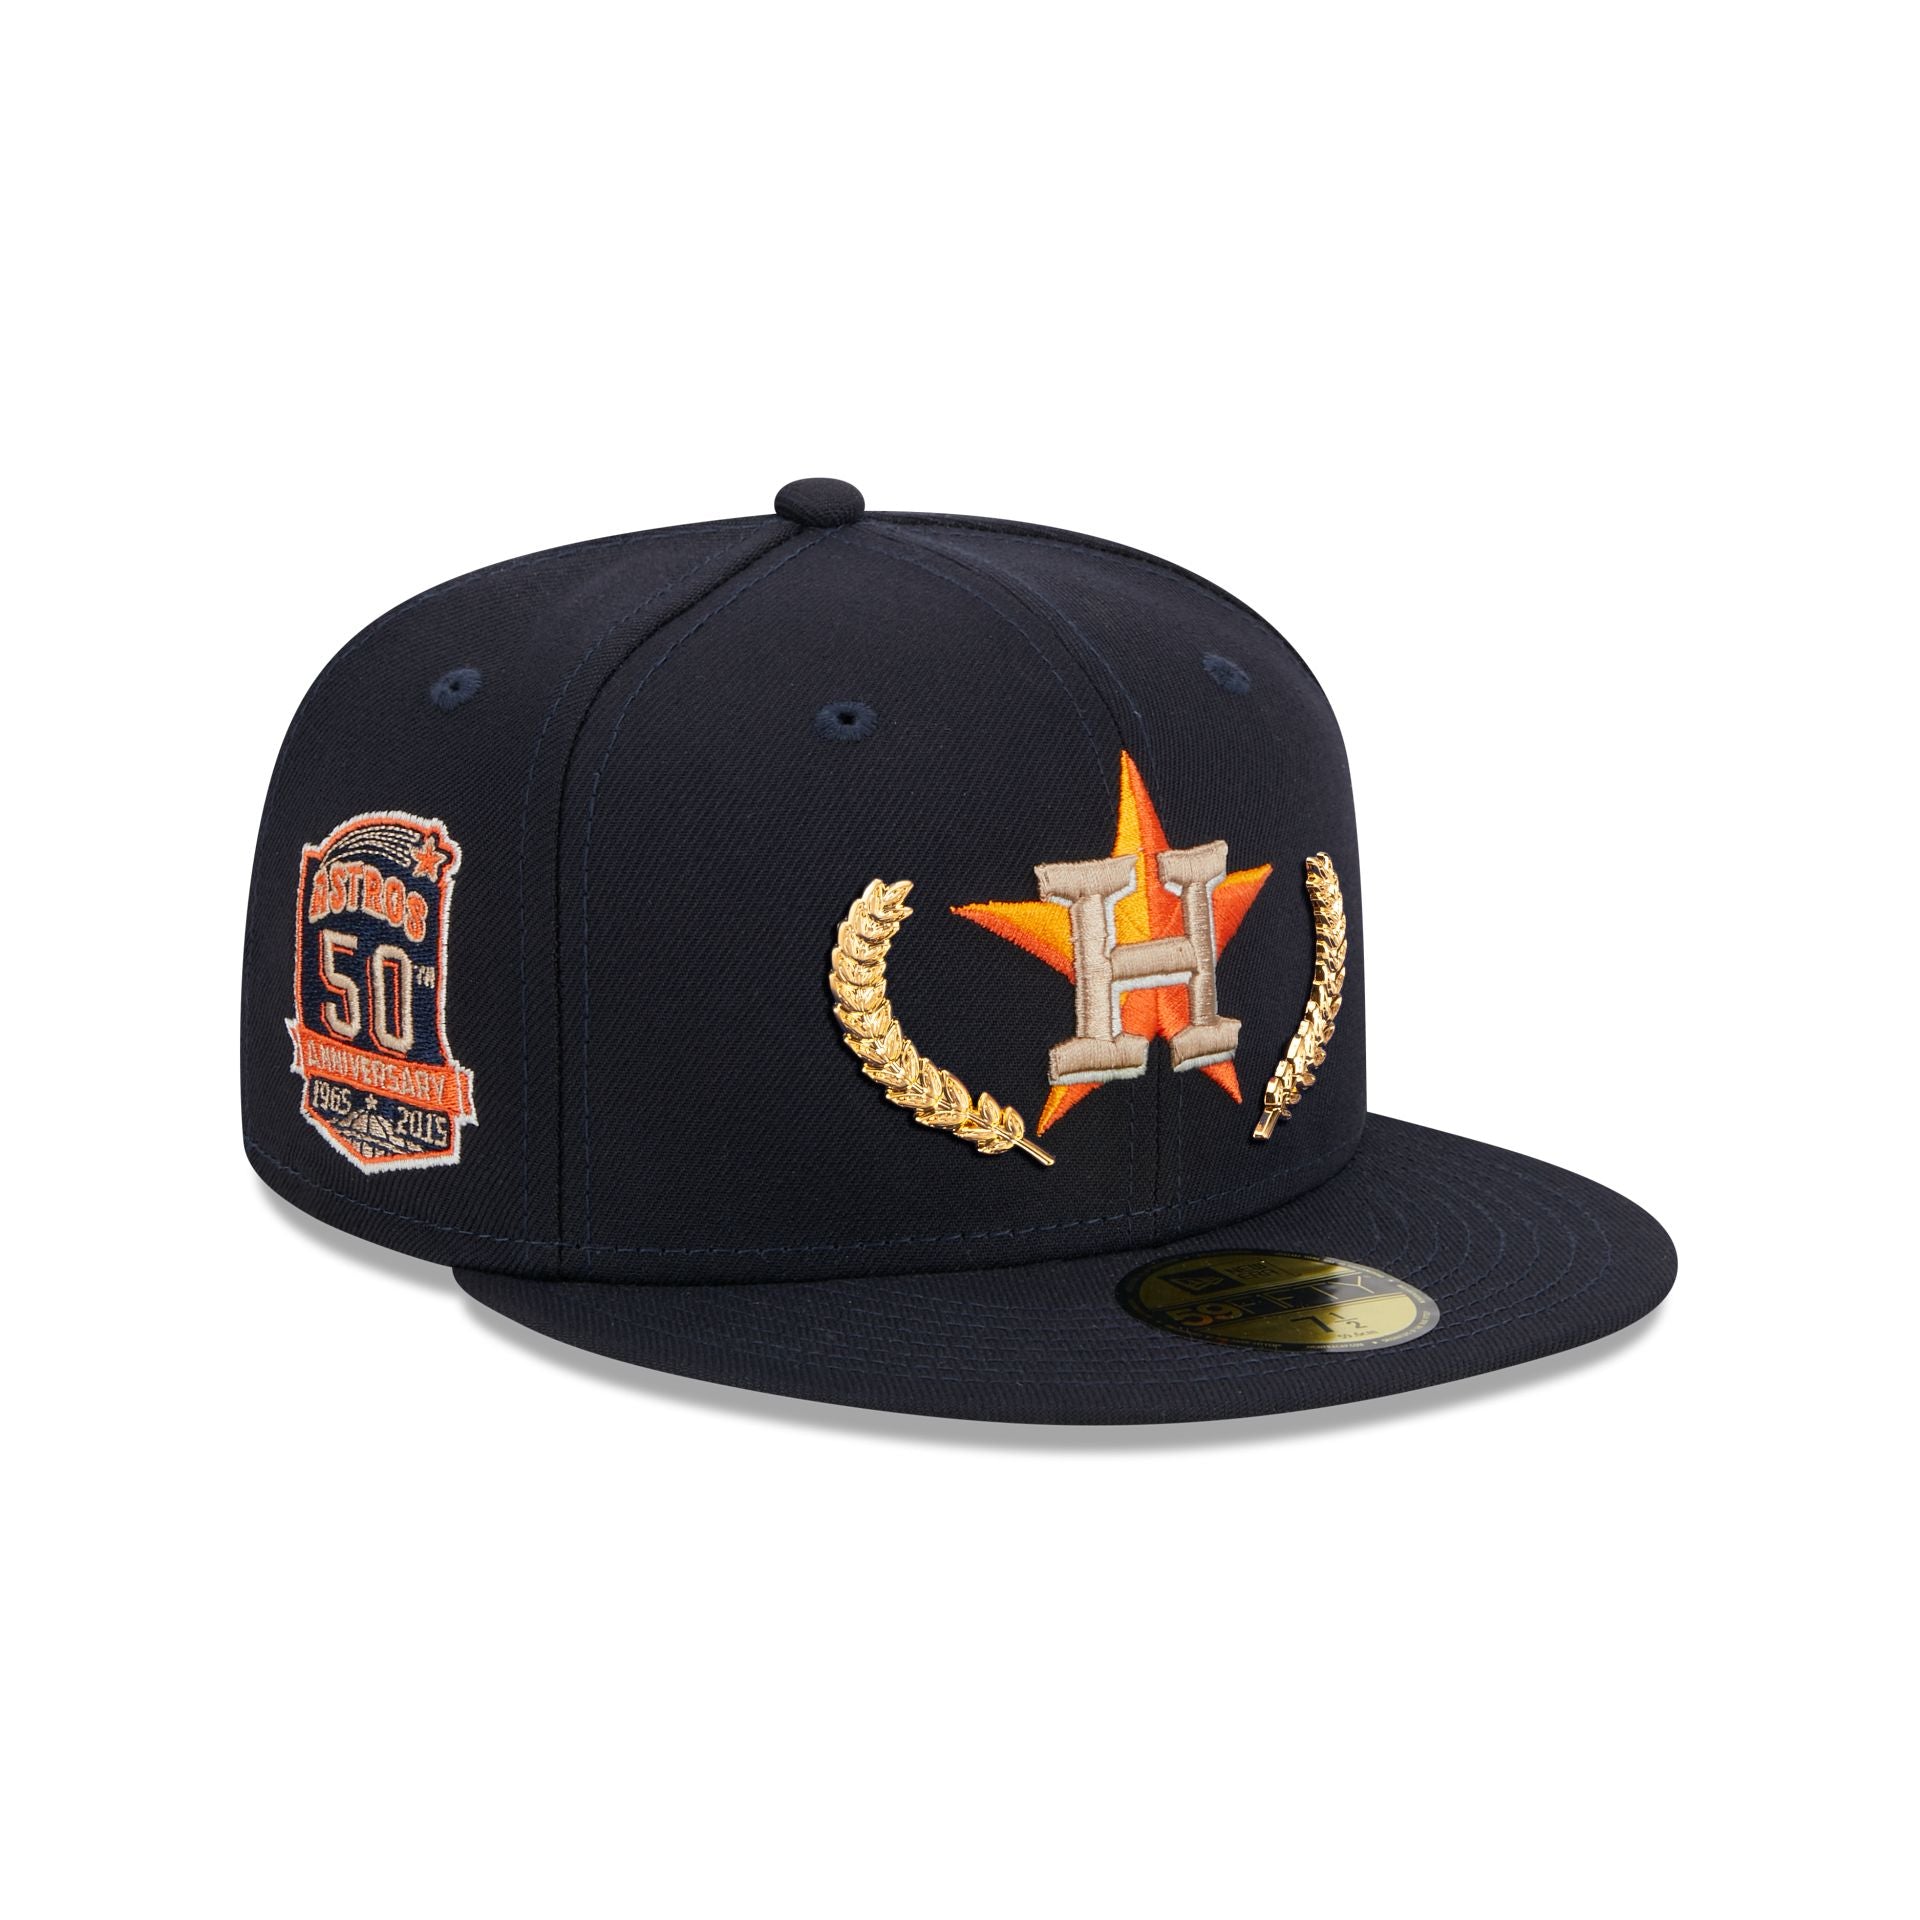 New era Houston Astros MLB Authentic Collection 59Fifty Cap Black